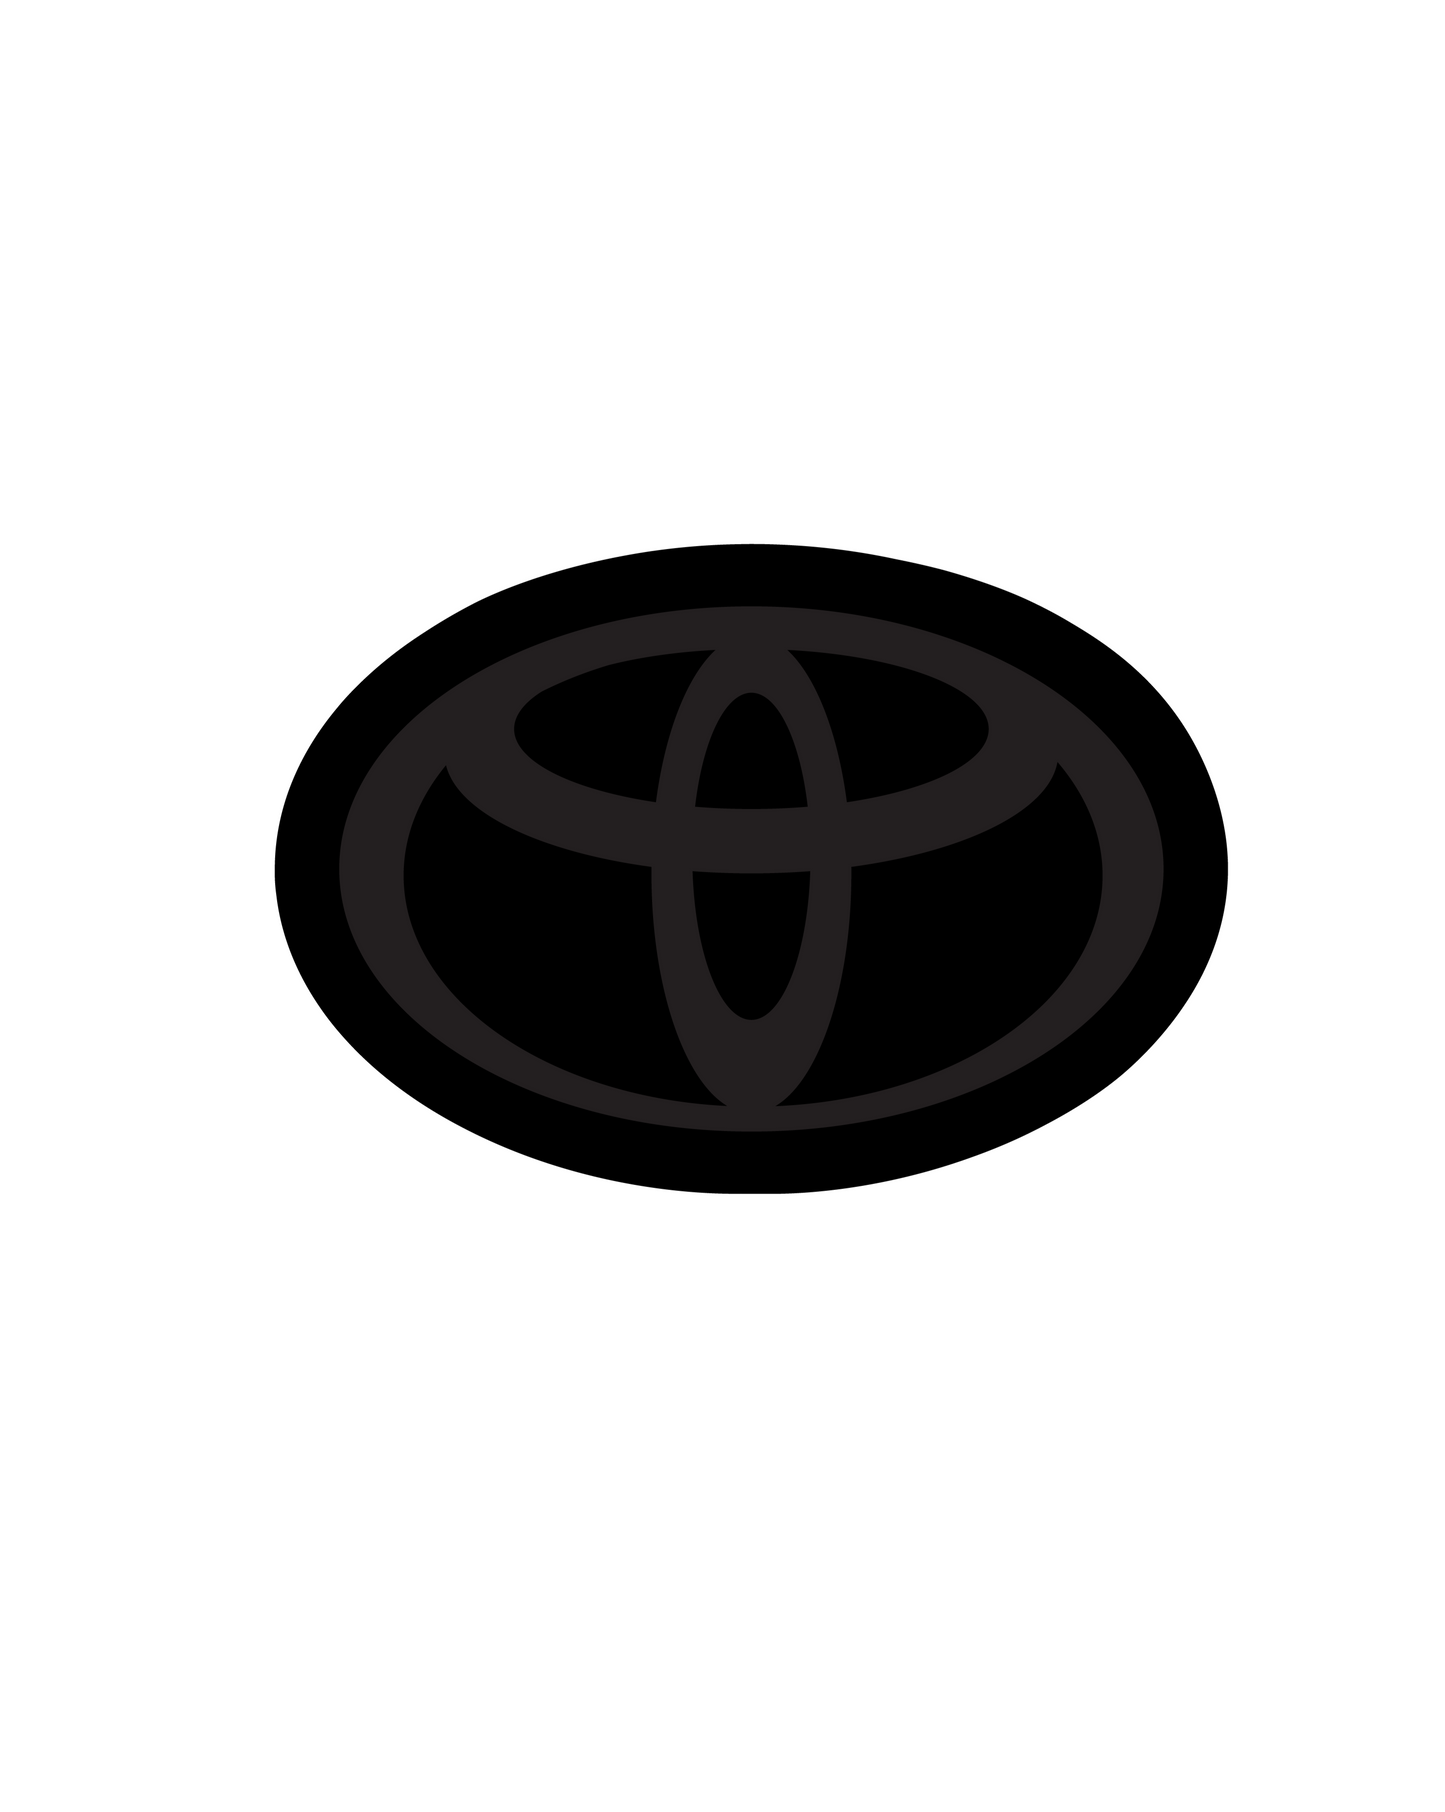 2018-2021 Toyota Tundra Stealth Emblem Front Vinyl Overlay